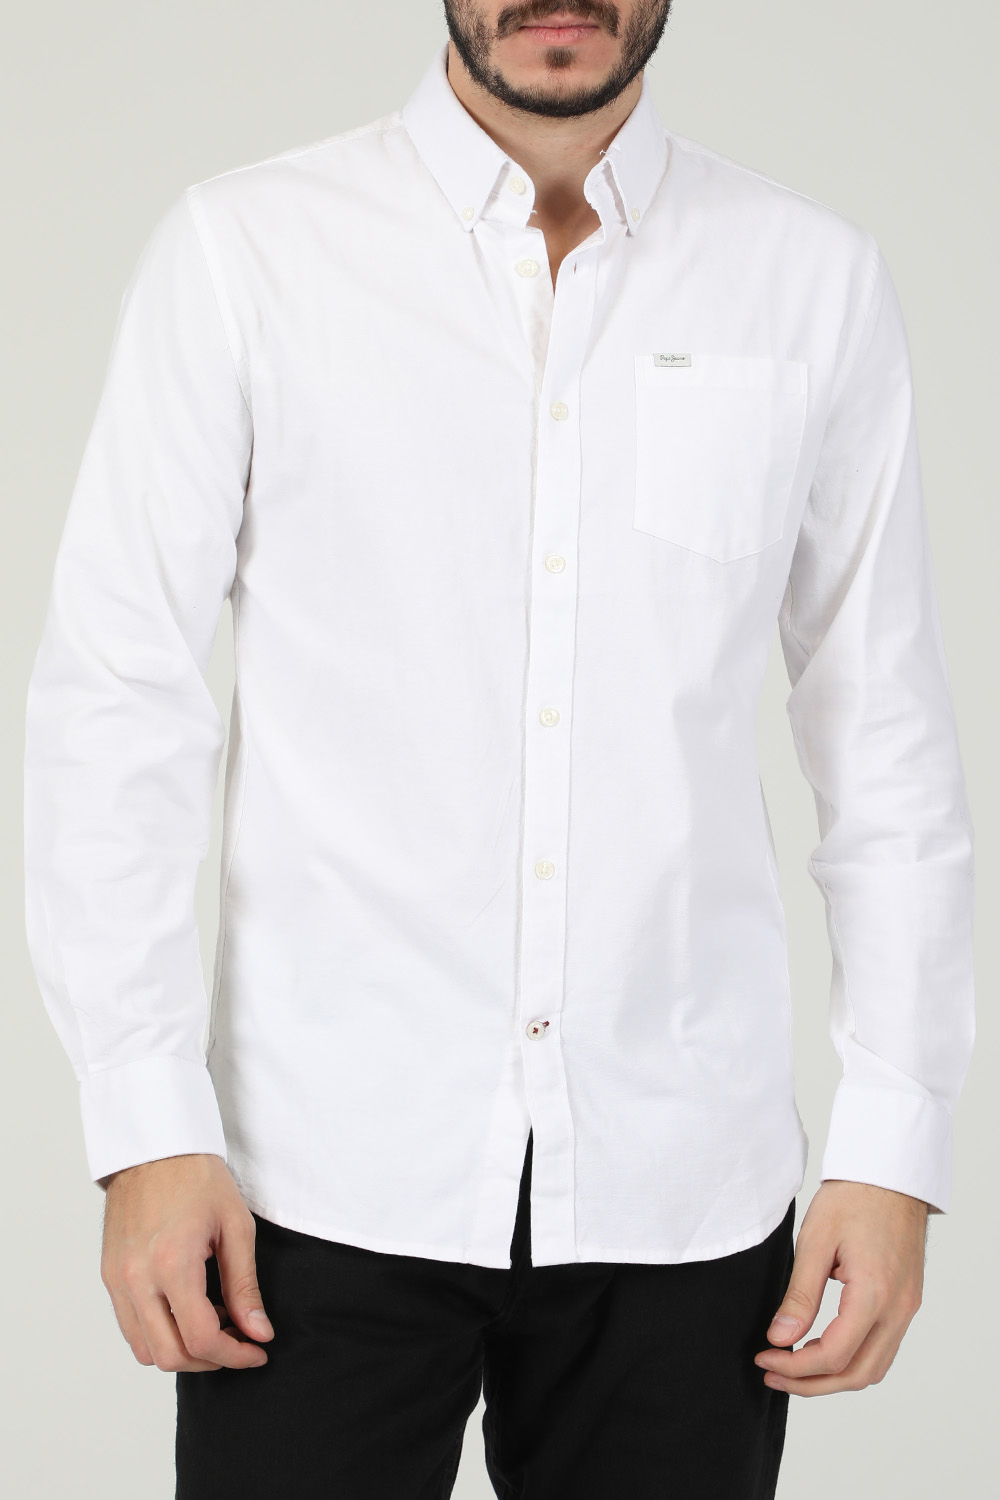 PEPE JEANS – Ανδρικο πουκαμισο PEPE JEANS JACKSON λευκο